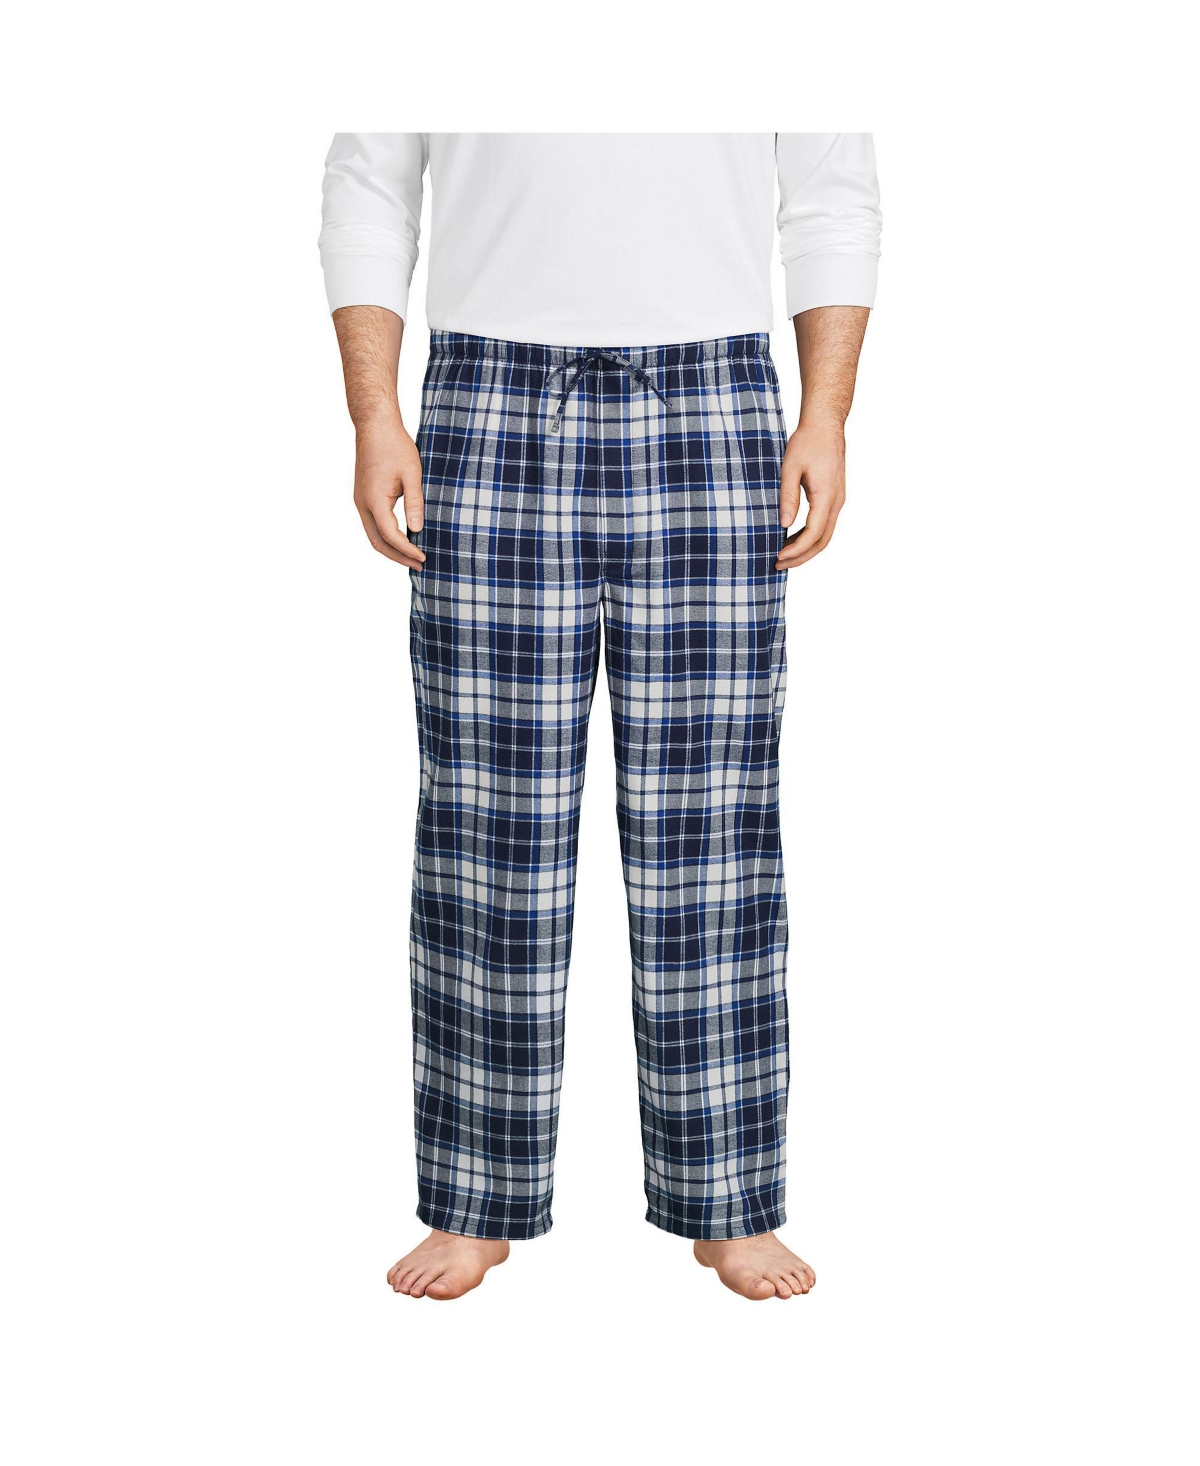 Blake Shelton x Lands' End Men's Poplin Pajama Pants